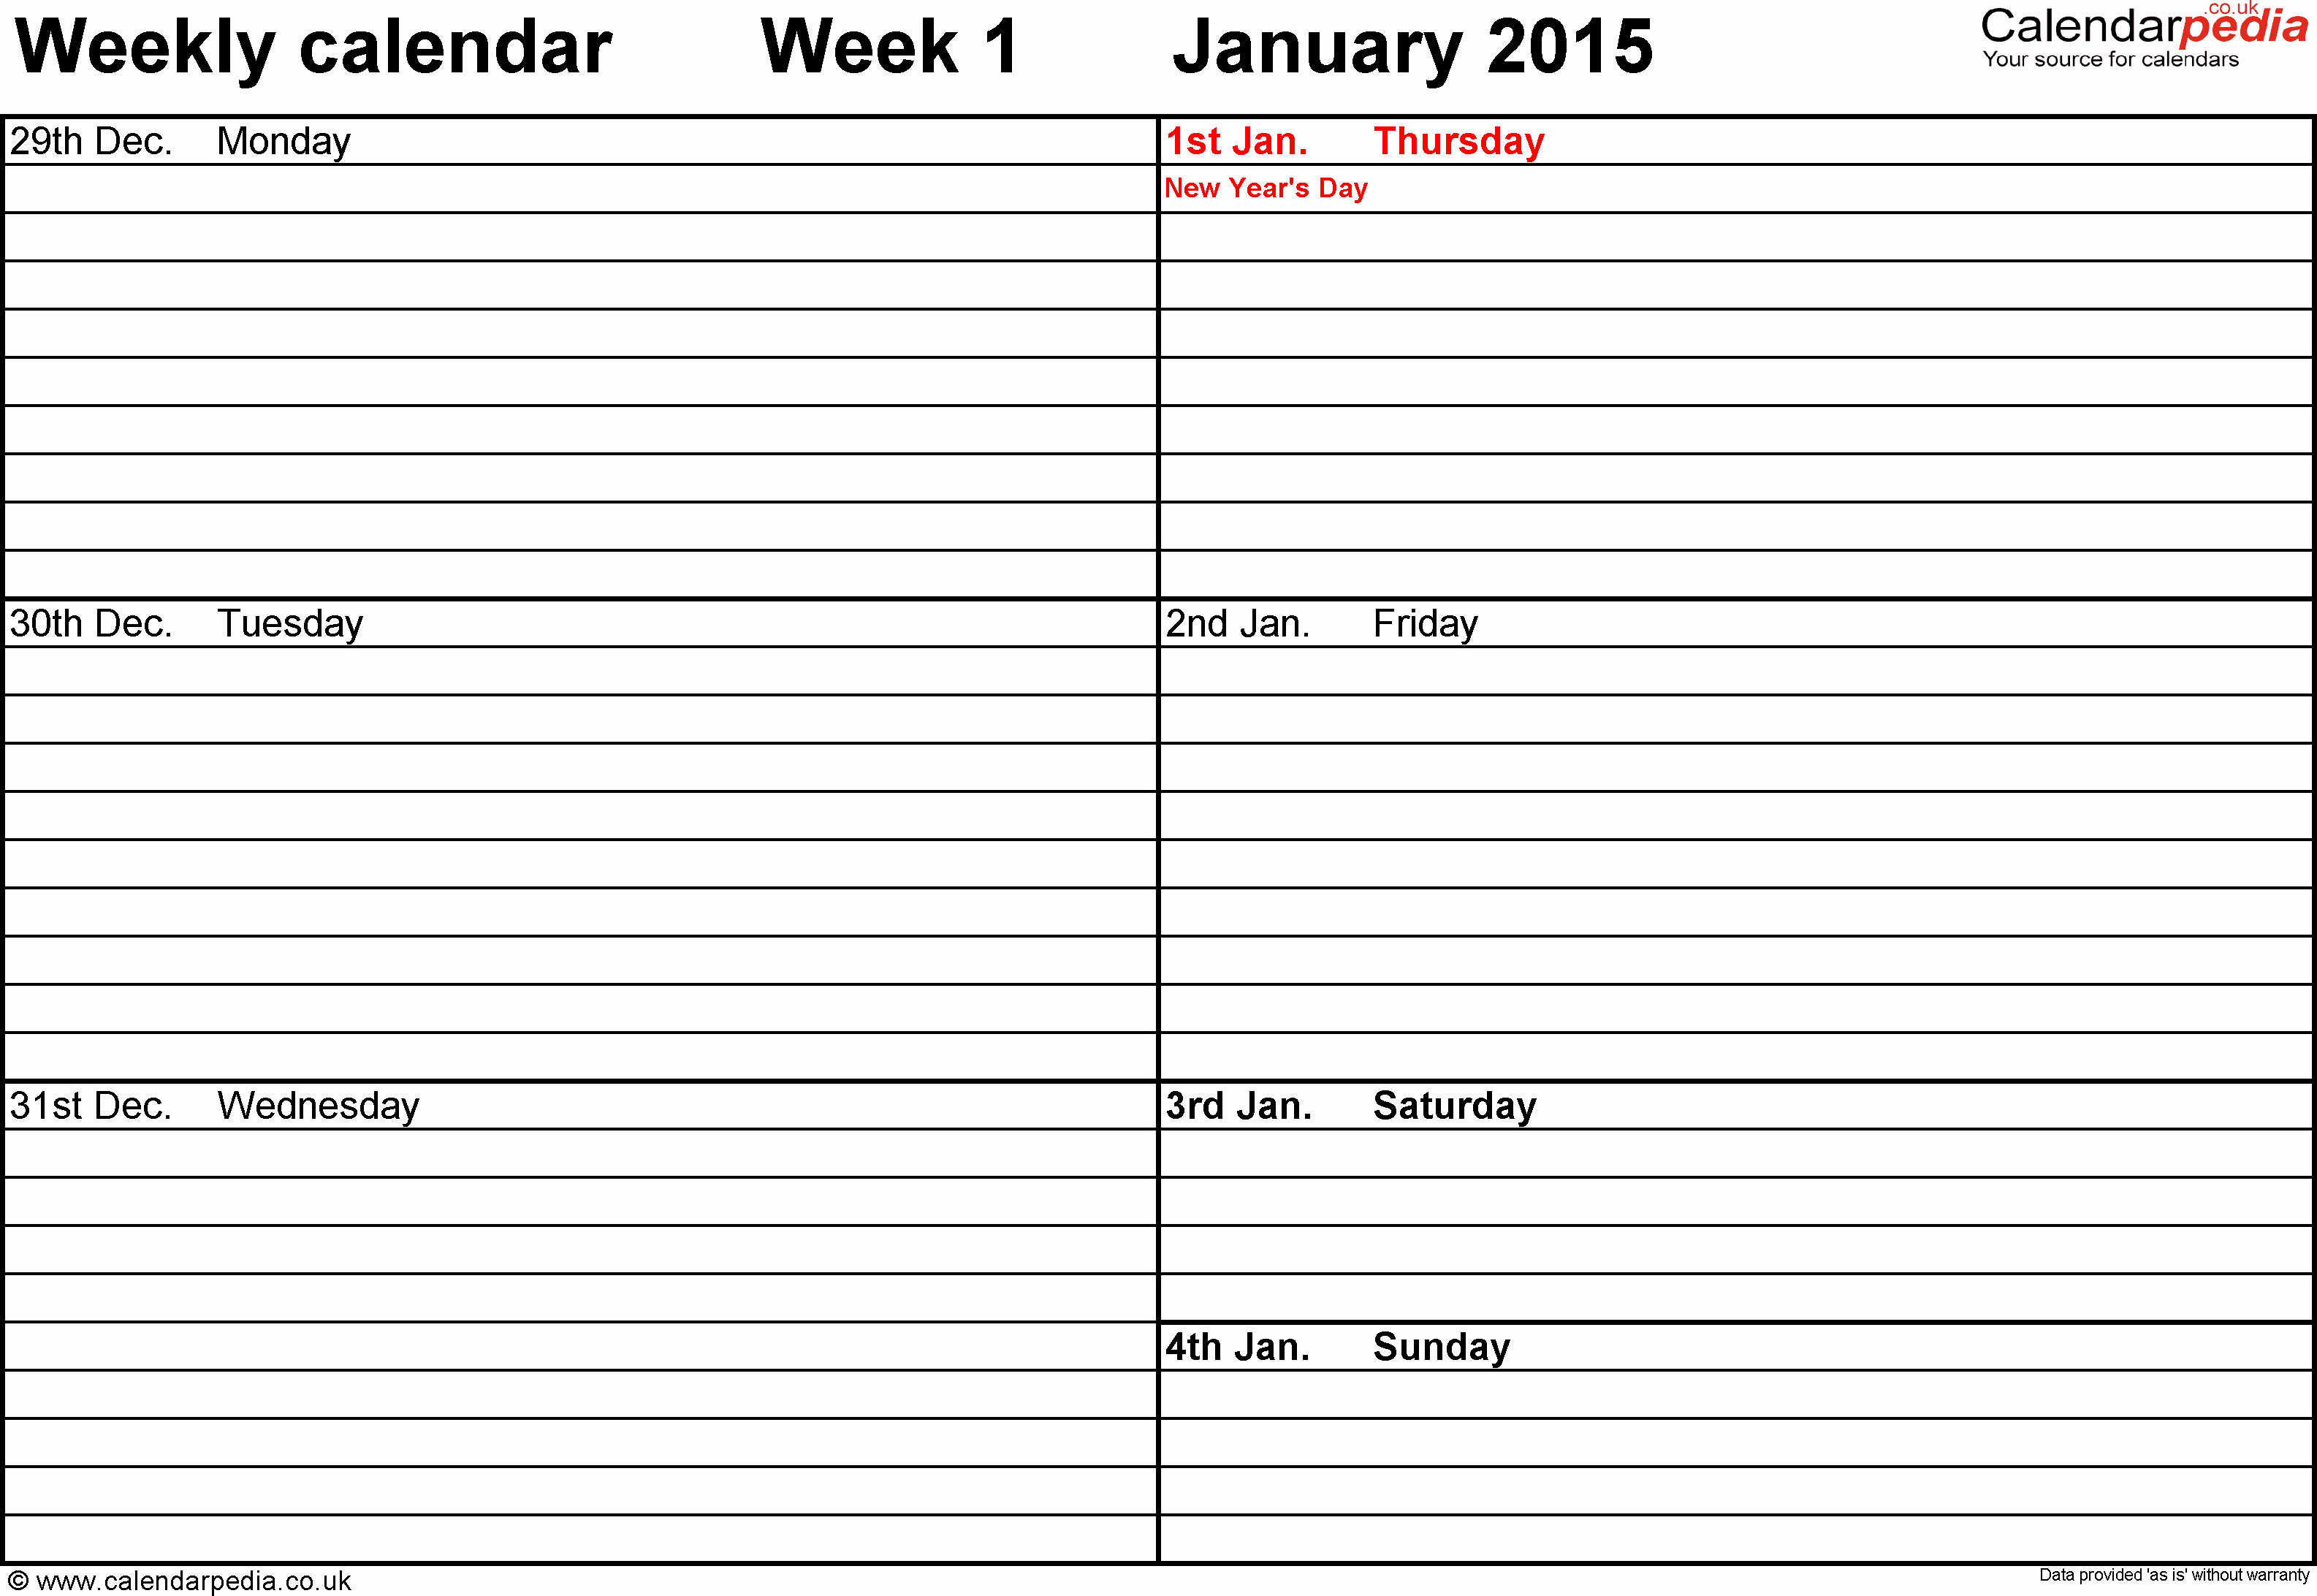 Weekly Calendar Template 2017 Fresh Weekly Calendar Template 2017